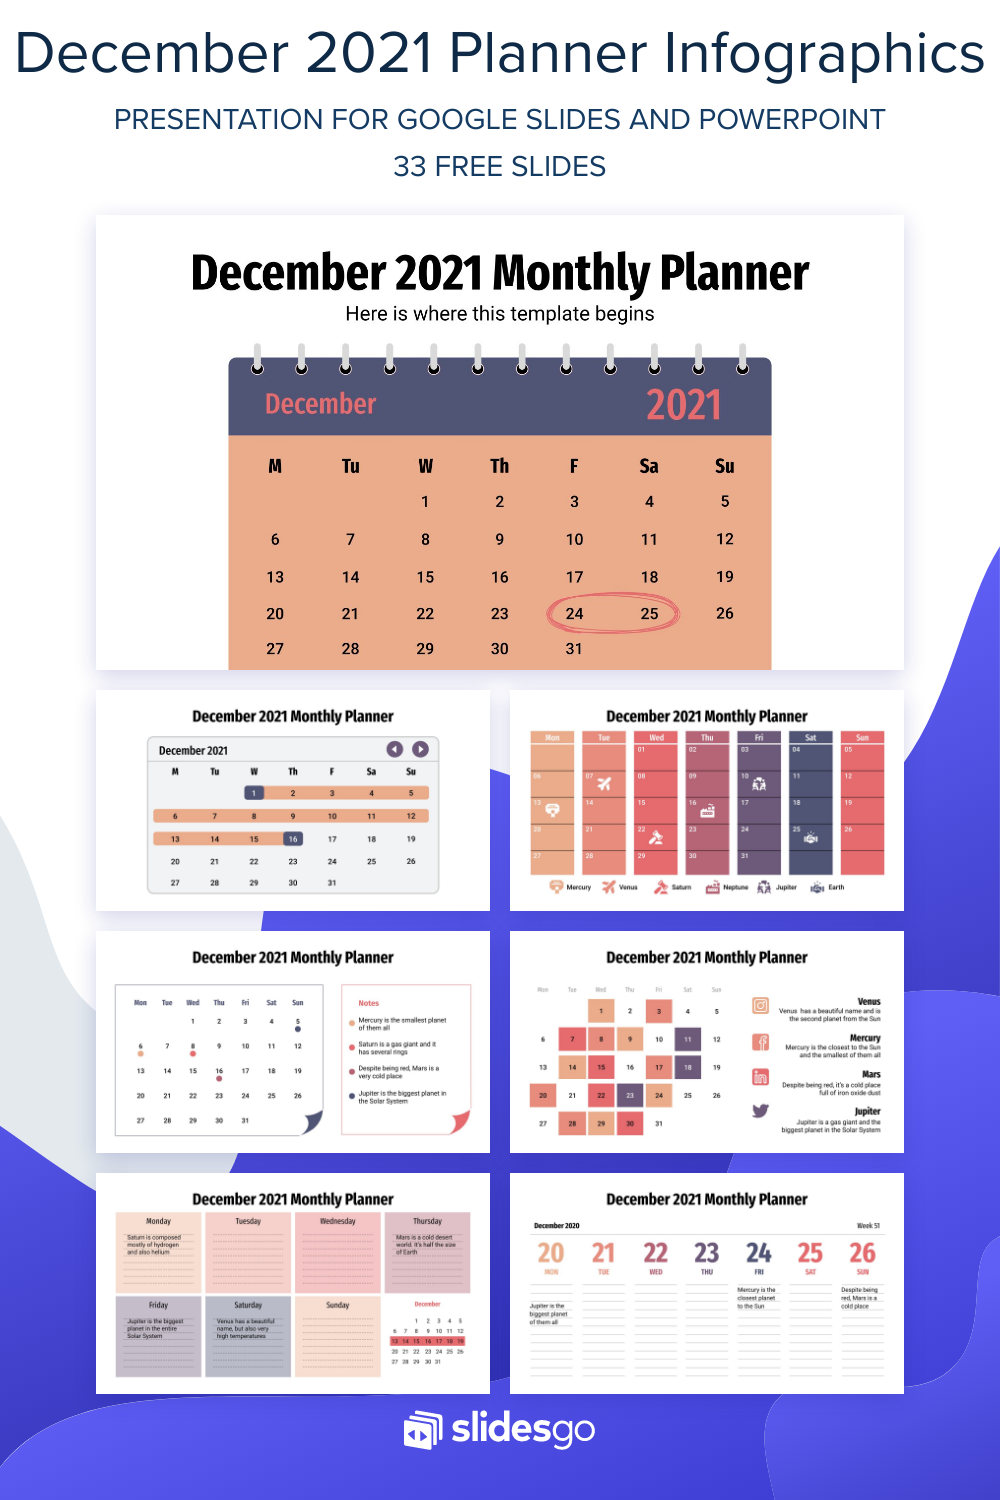 Screenshot of December 2021 Monthly Planner Infographics by slidesgo